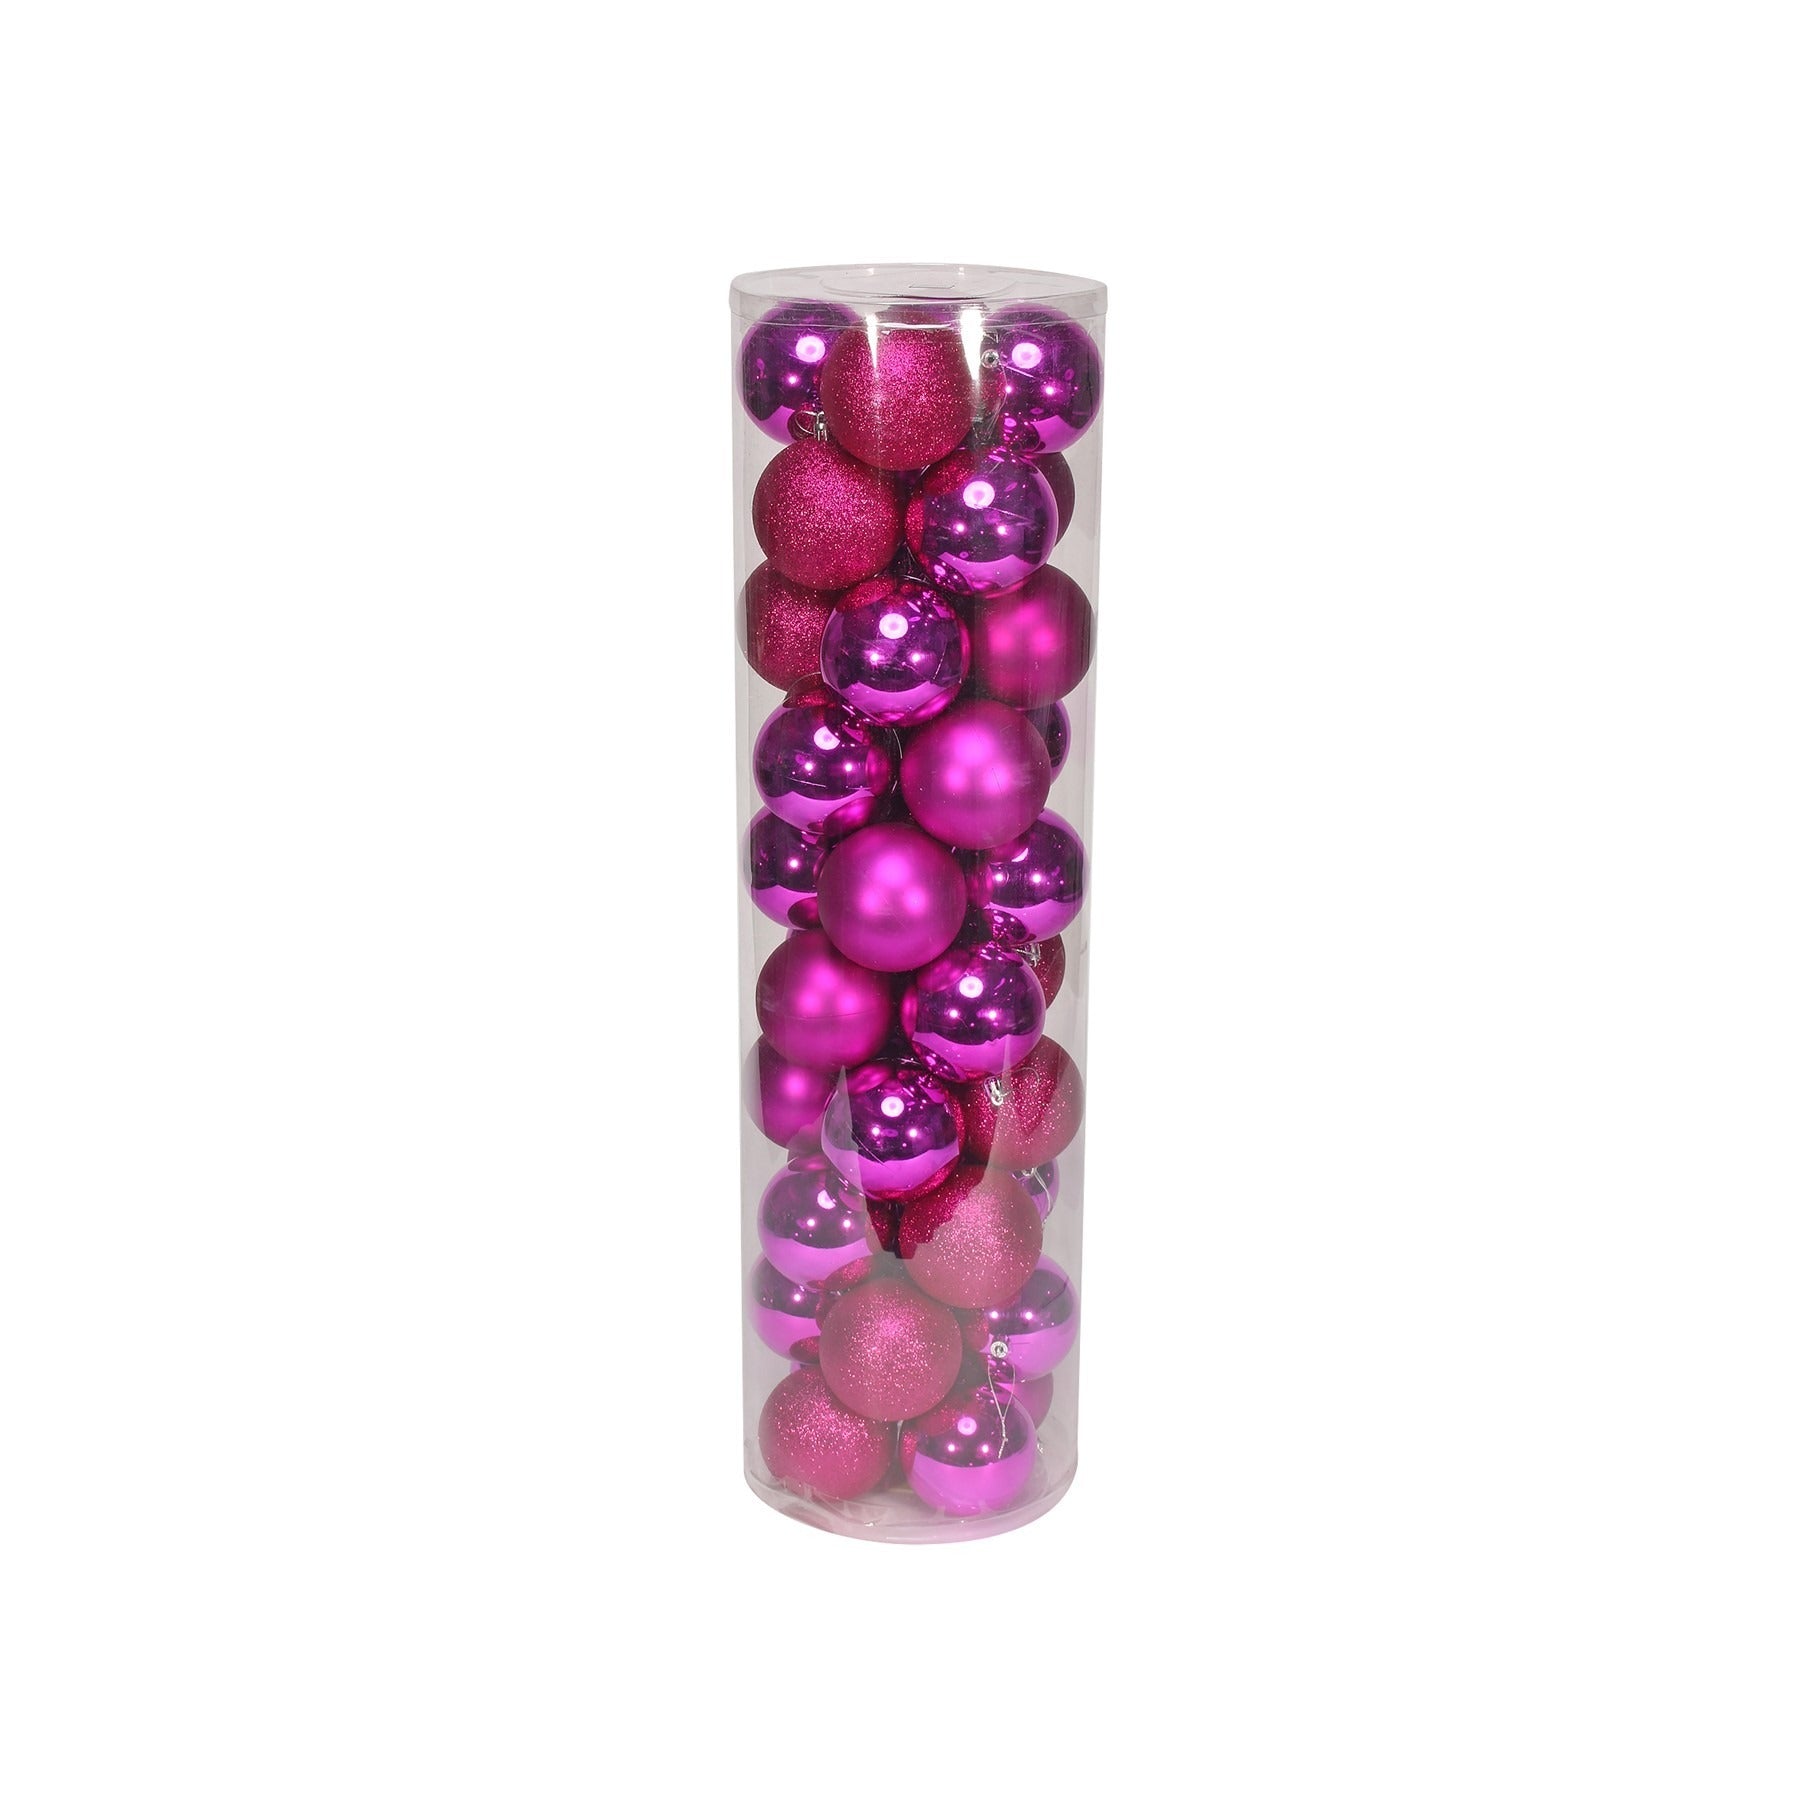 View 40 Hot Pink Baubles in Matt Shiny Glitter Finish 8cm information